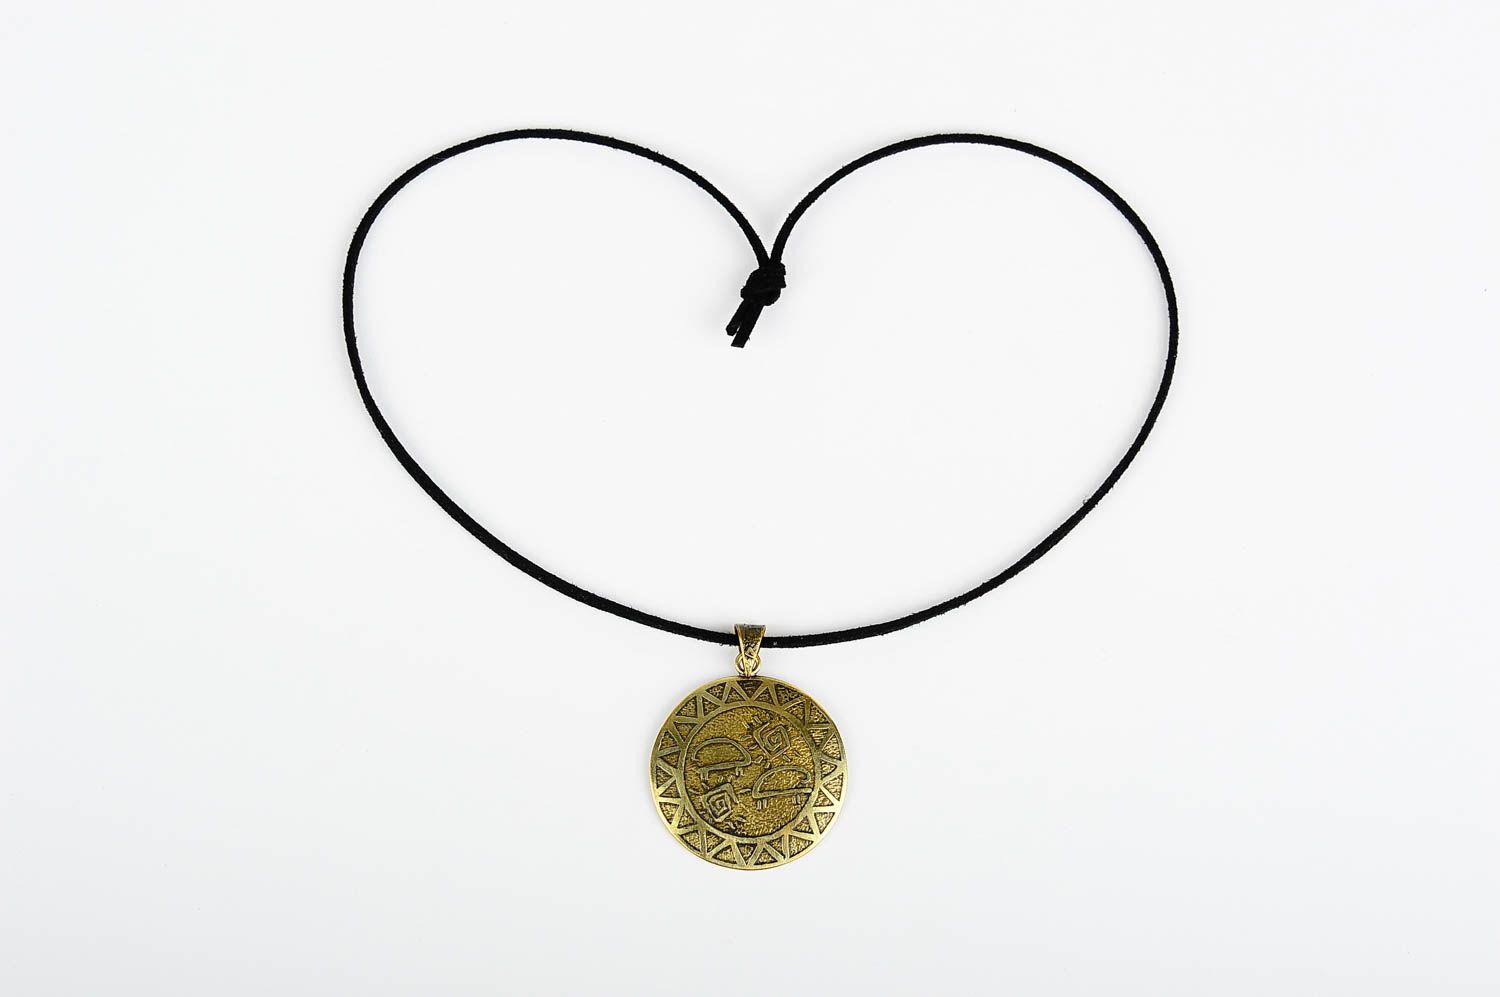 Handmade pendant metal jewelry designer accessory gift ideas unusual pendant photo 1